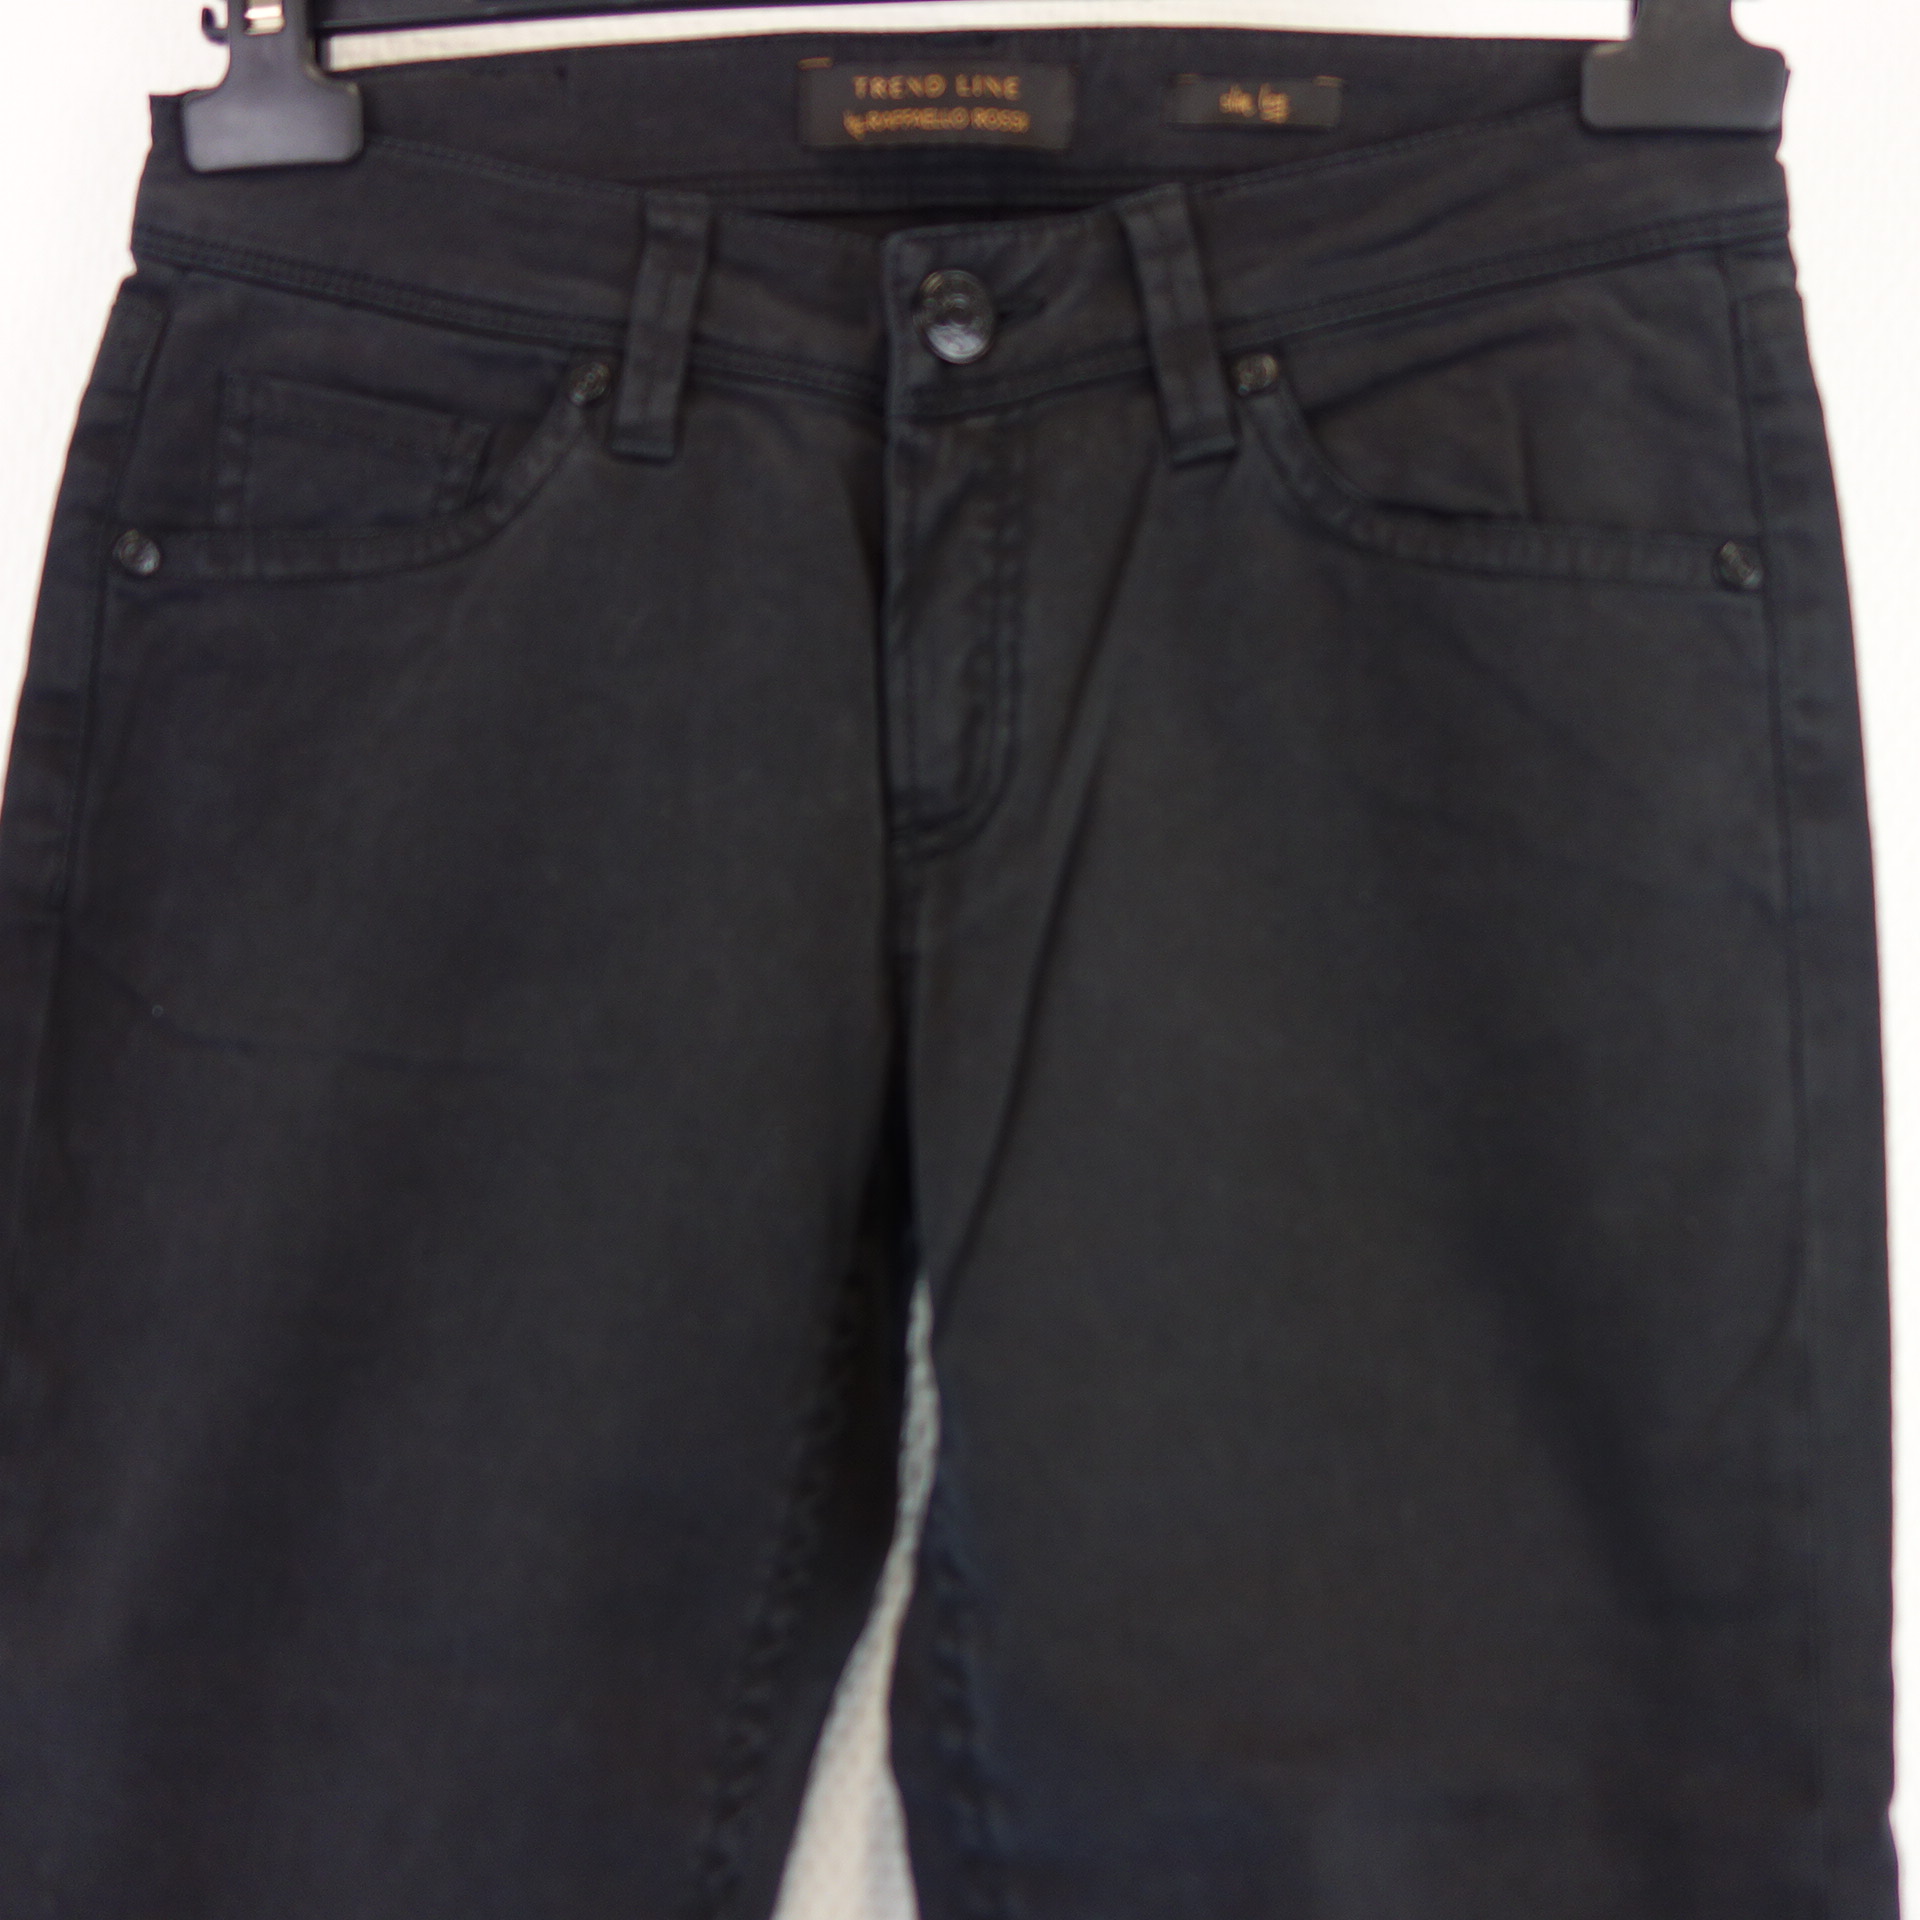 RAFFAELLO ROSSI TREND LINE Damen Jeans Hose Jeanshose Schwarz Gr 36 Modell Sinty Stick Slim Fit